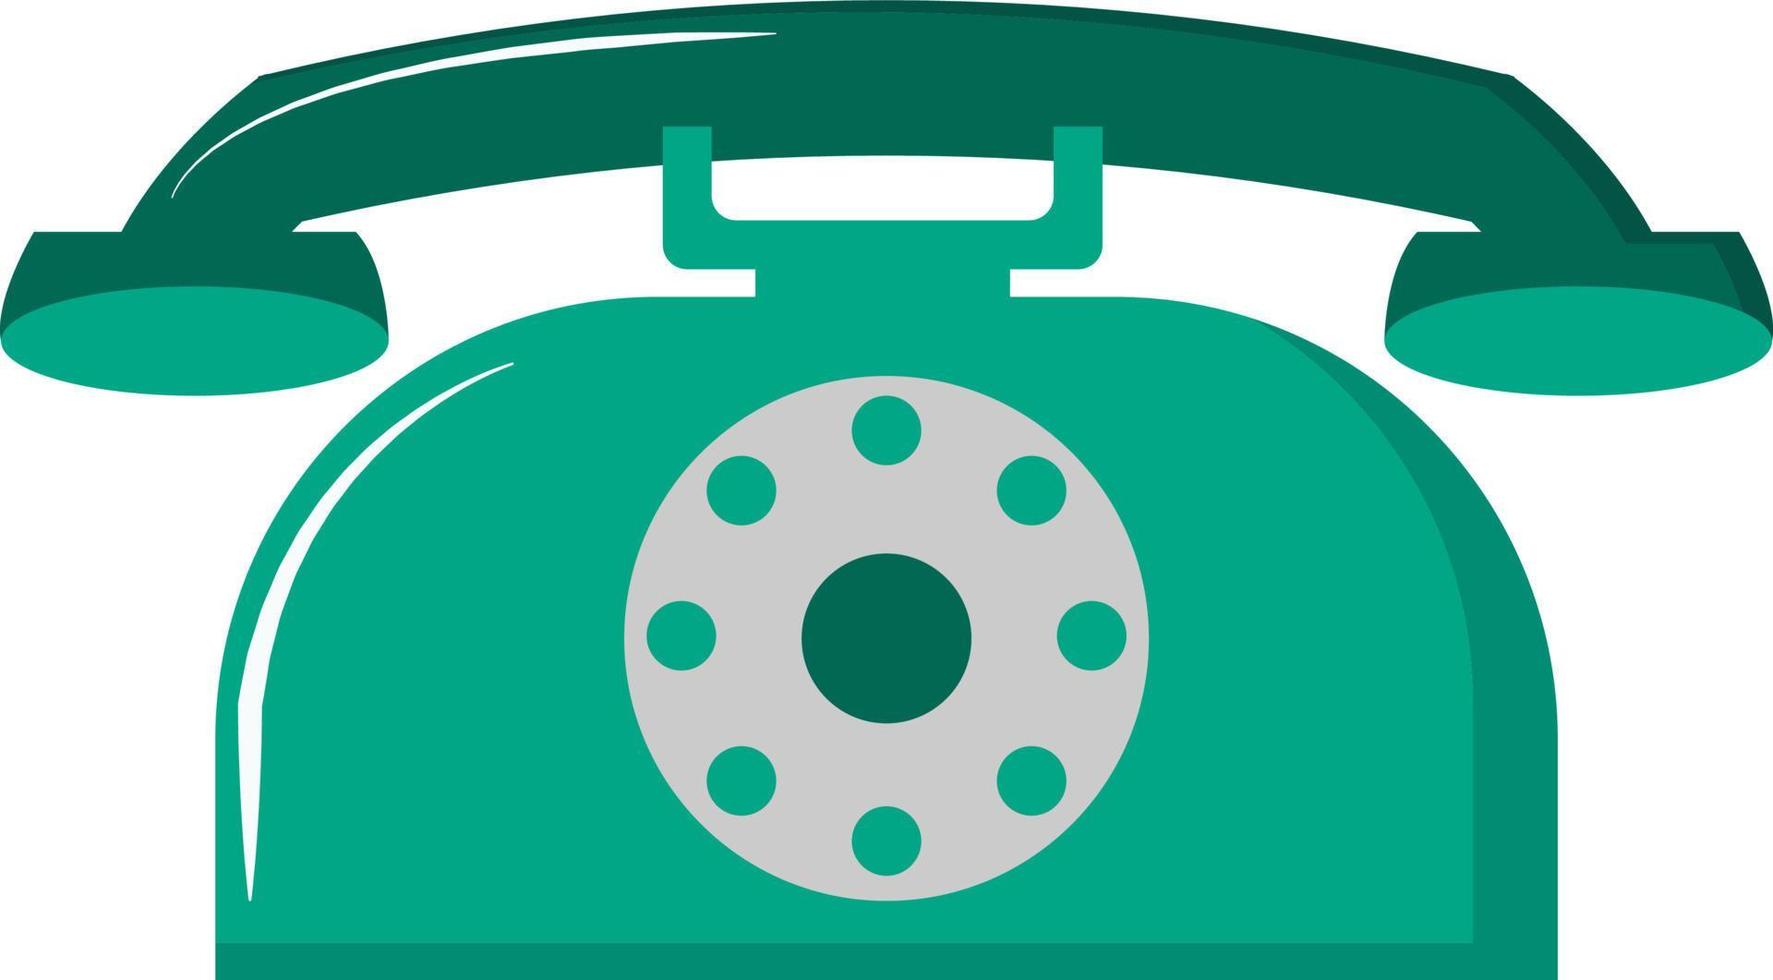 Retro green telephone, illustration, vector on white background.